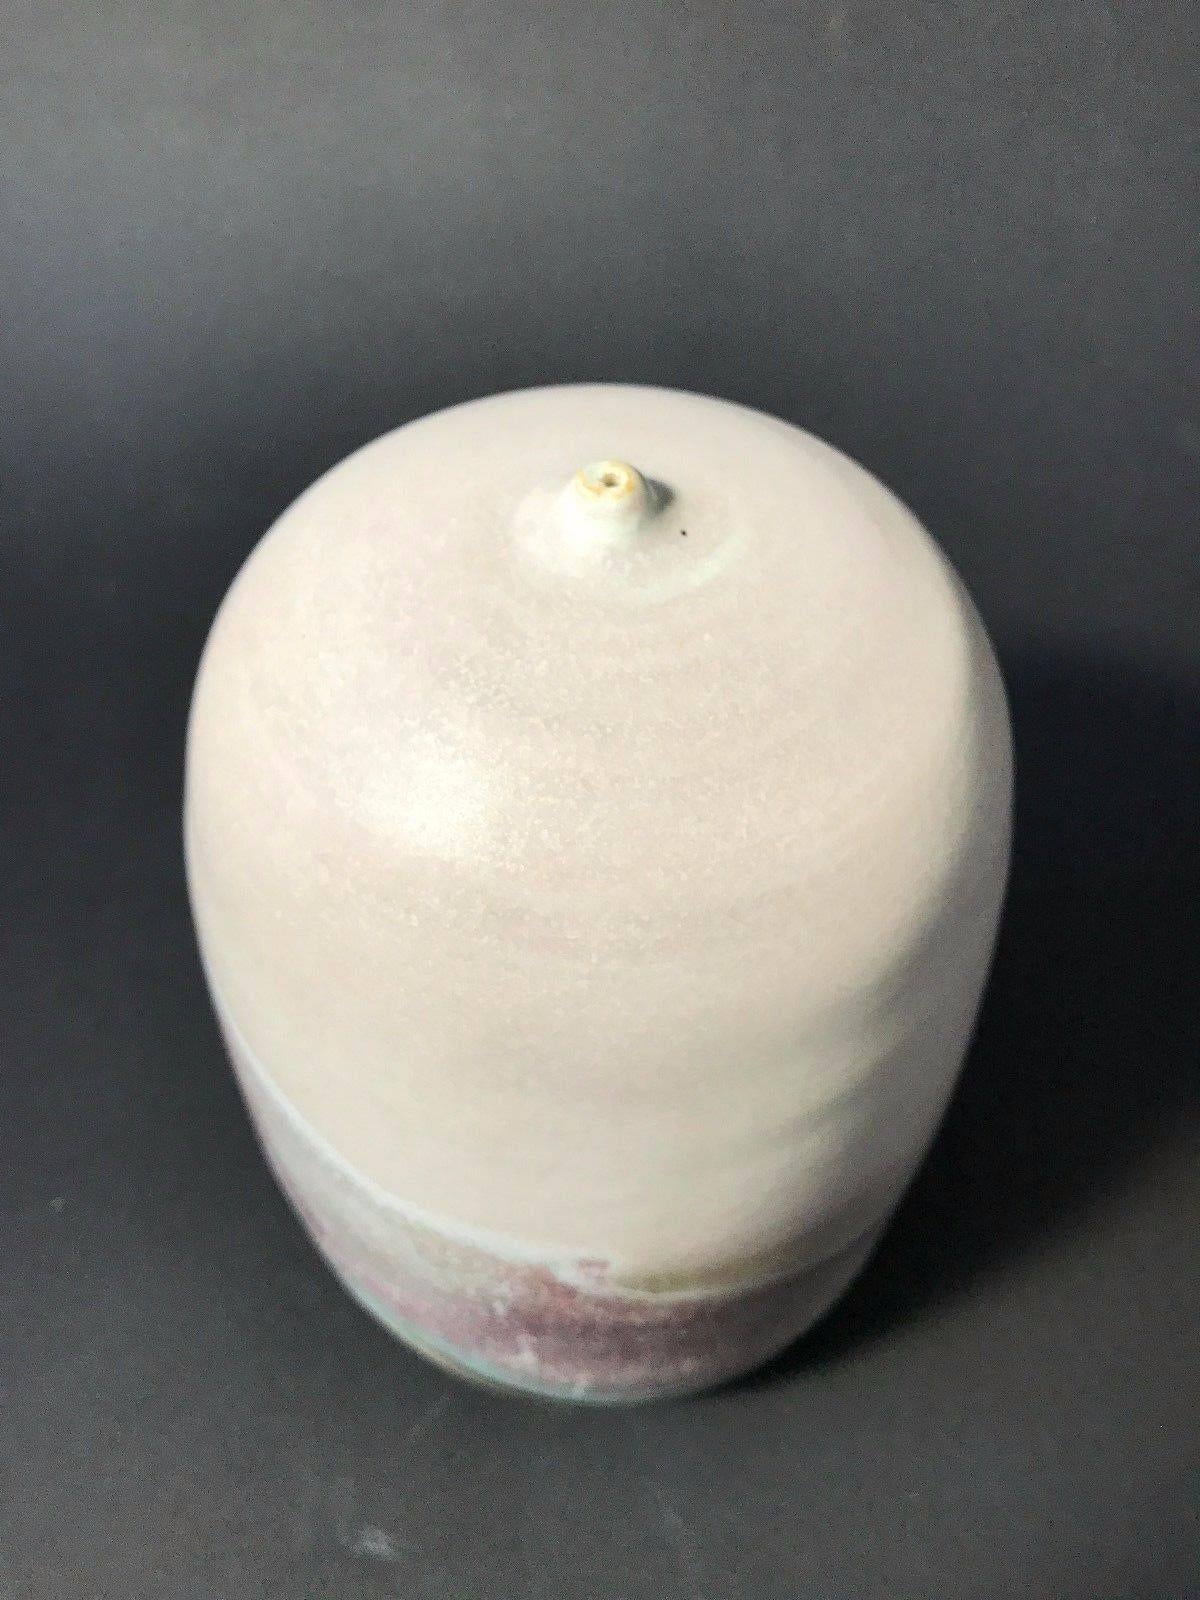 American Contemporary Toshiko Takaezu Ceramic Art Sculpture Moon Pot with Rattle